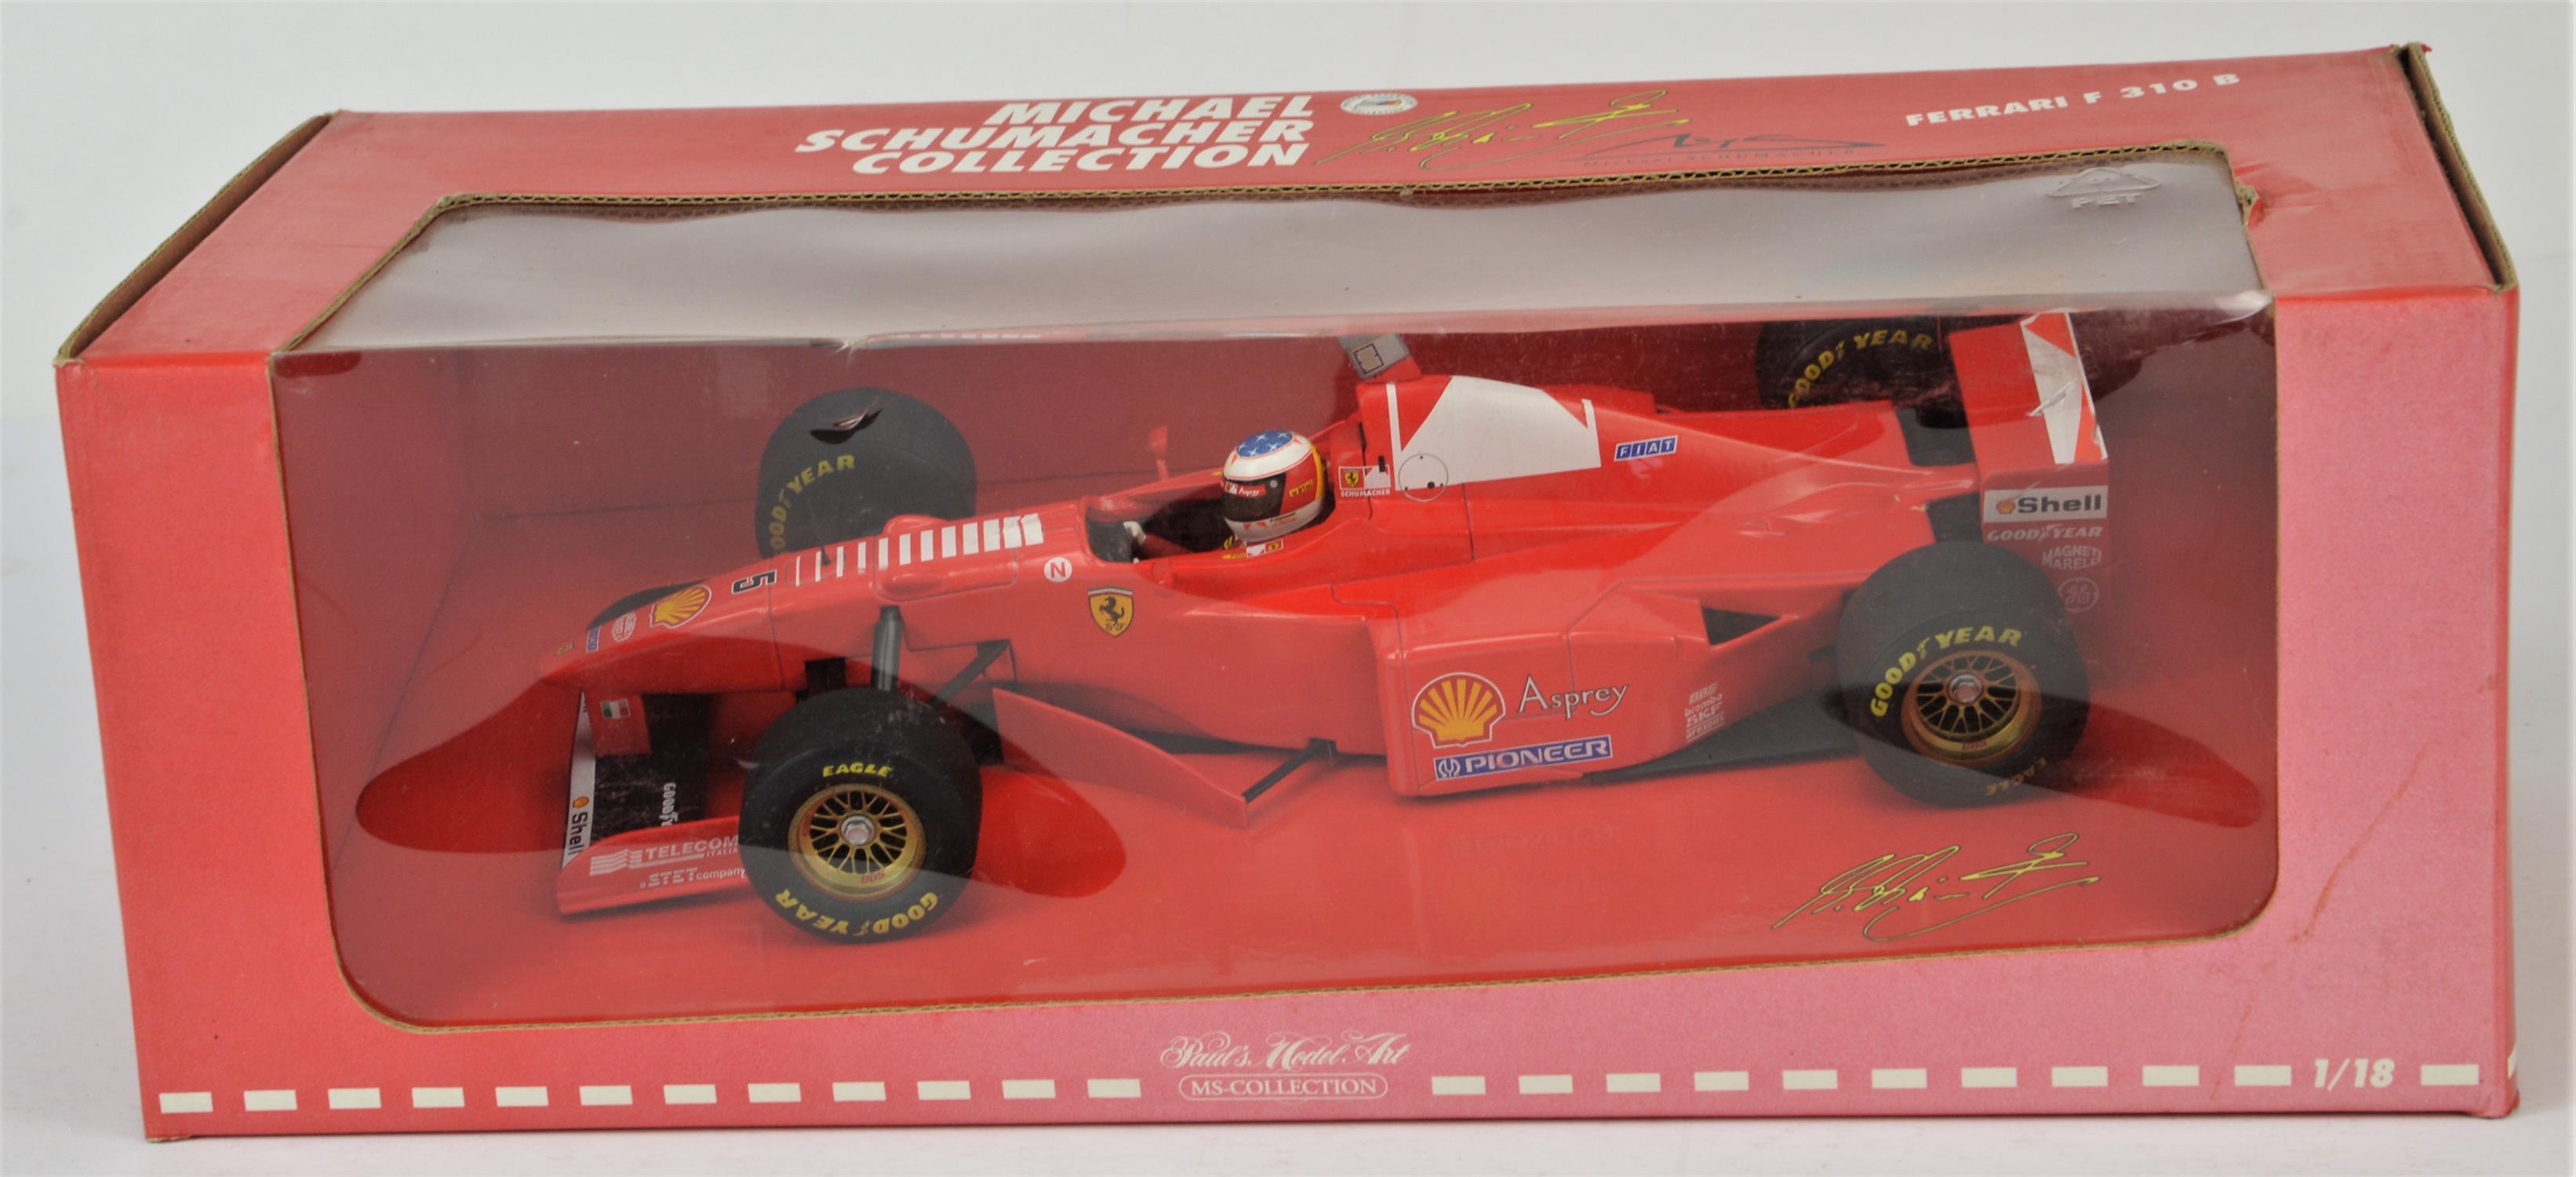 Hot Wheels Racing - Four Michael Schumacher collection, Boxed Mattel Ferrari 1:18 scale models, - Image 4 of 5